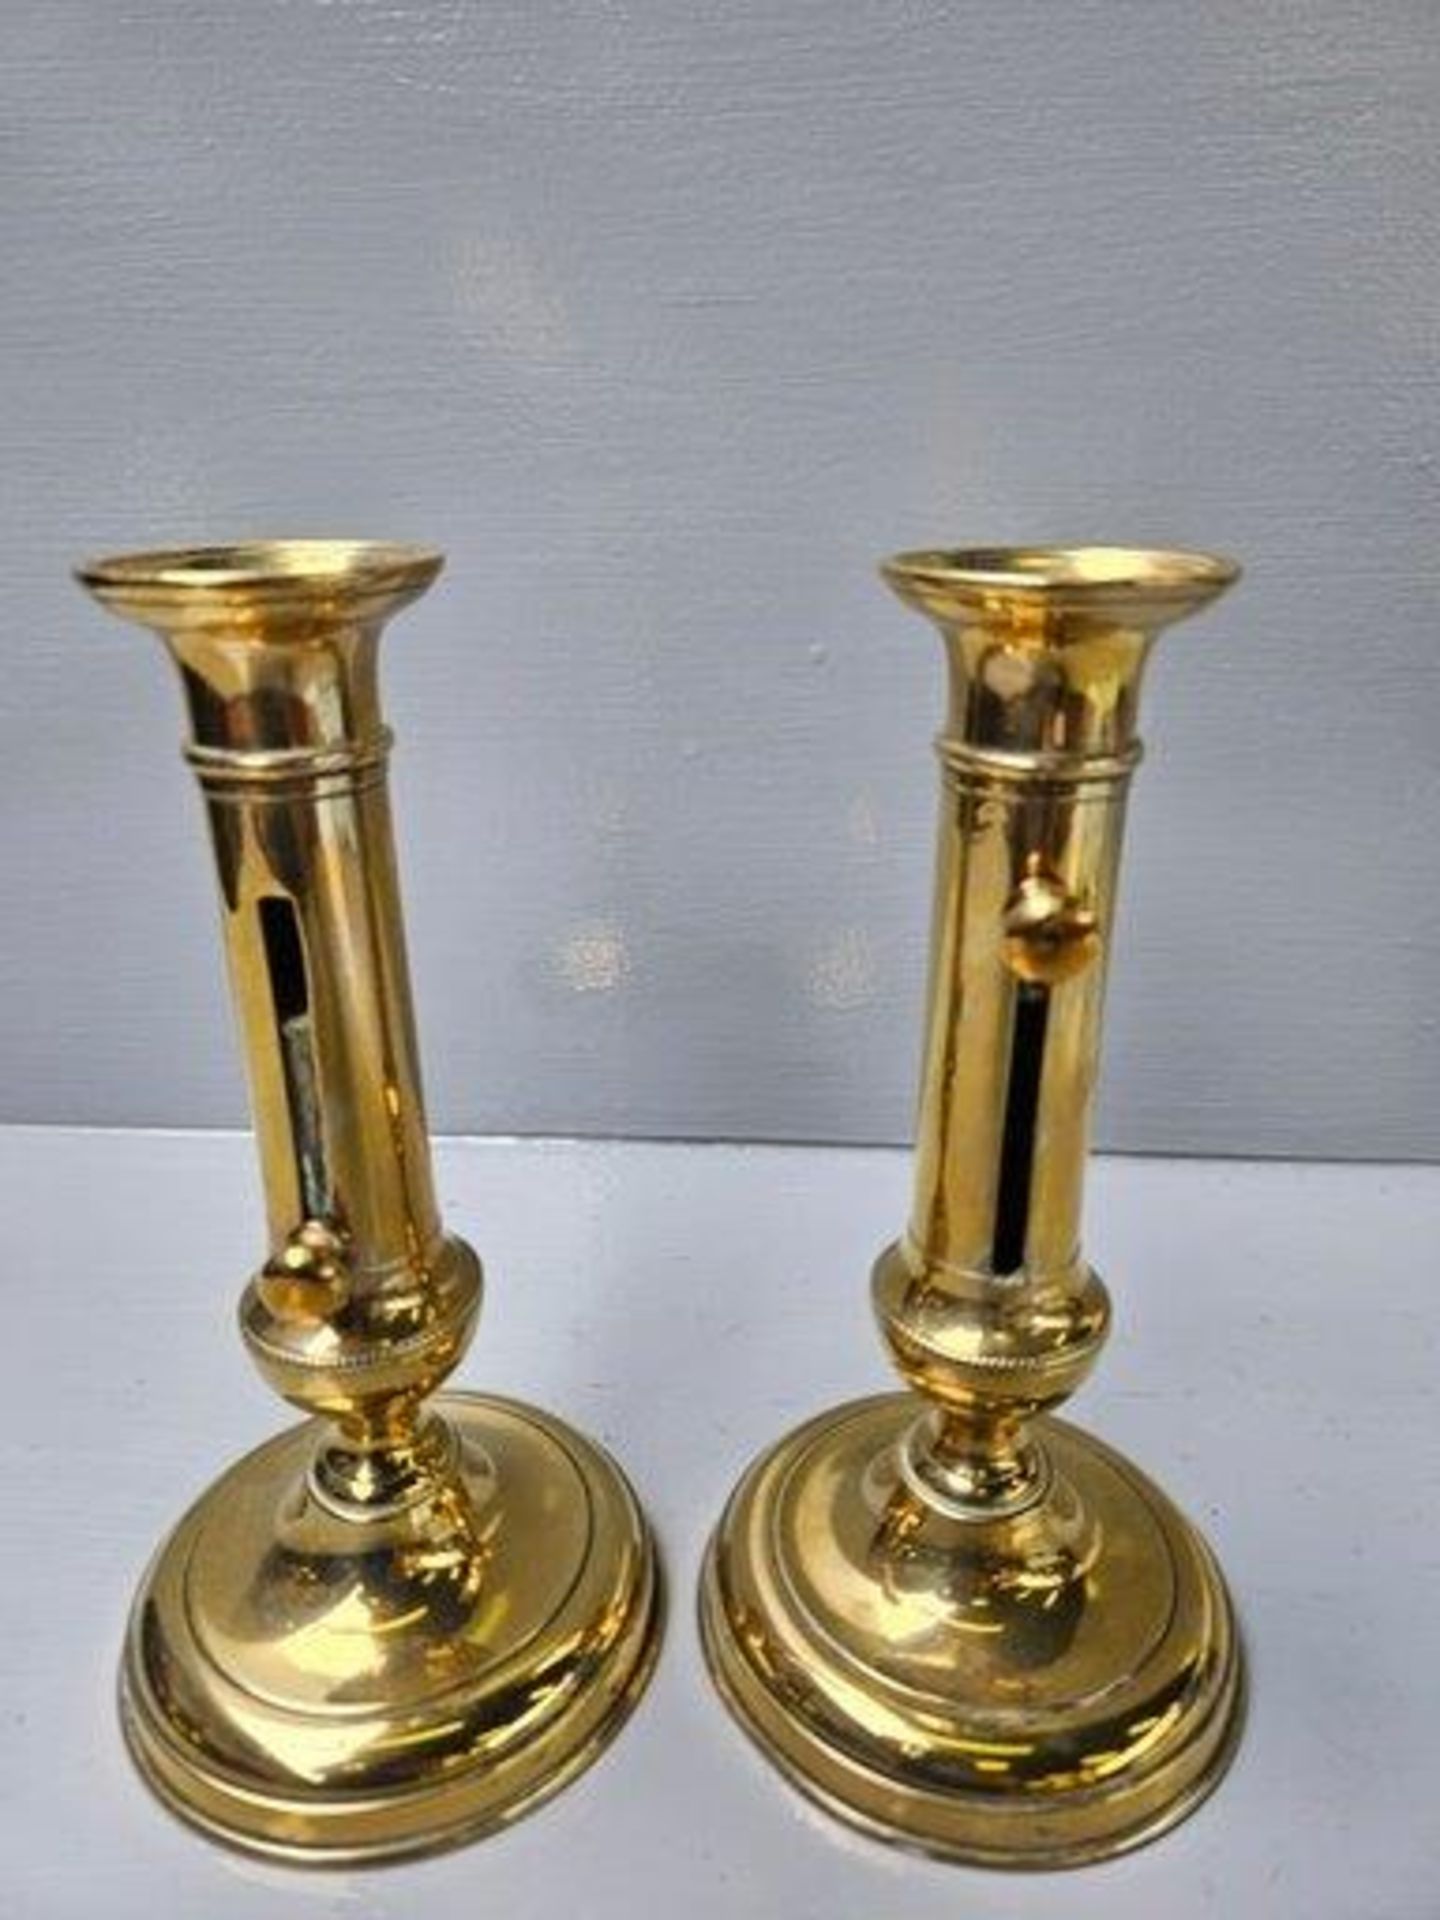 2 Brass Candlesticks - Image 2 of 3